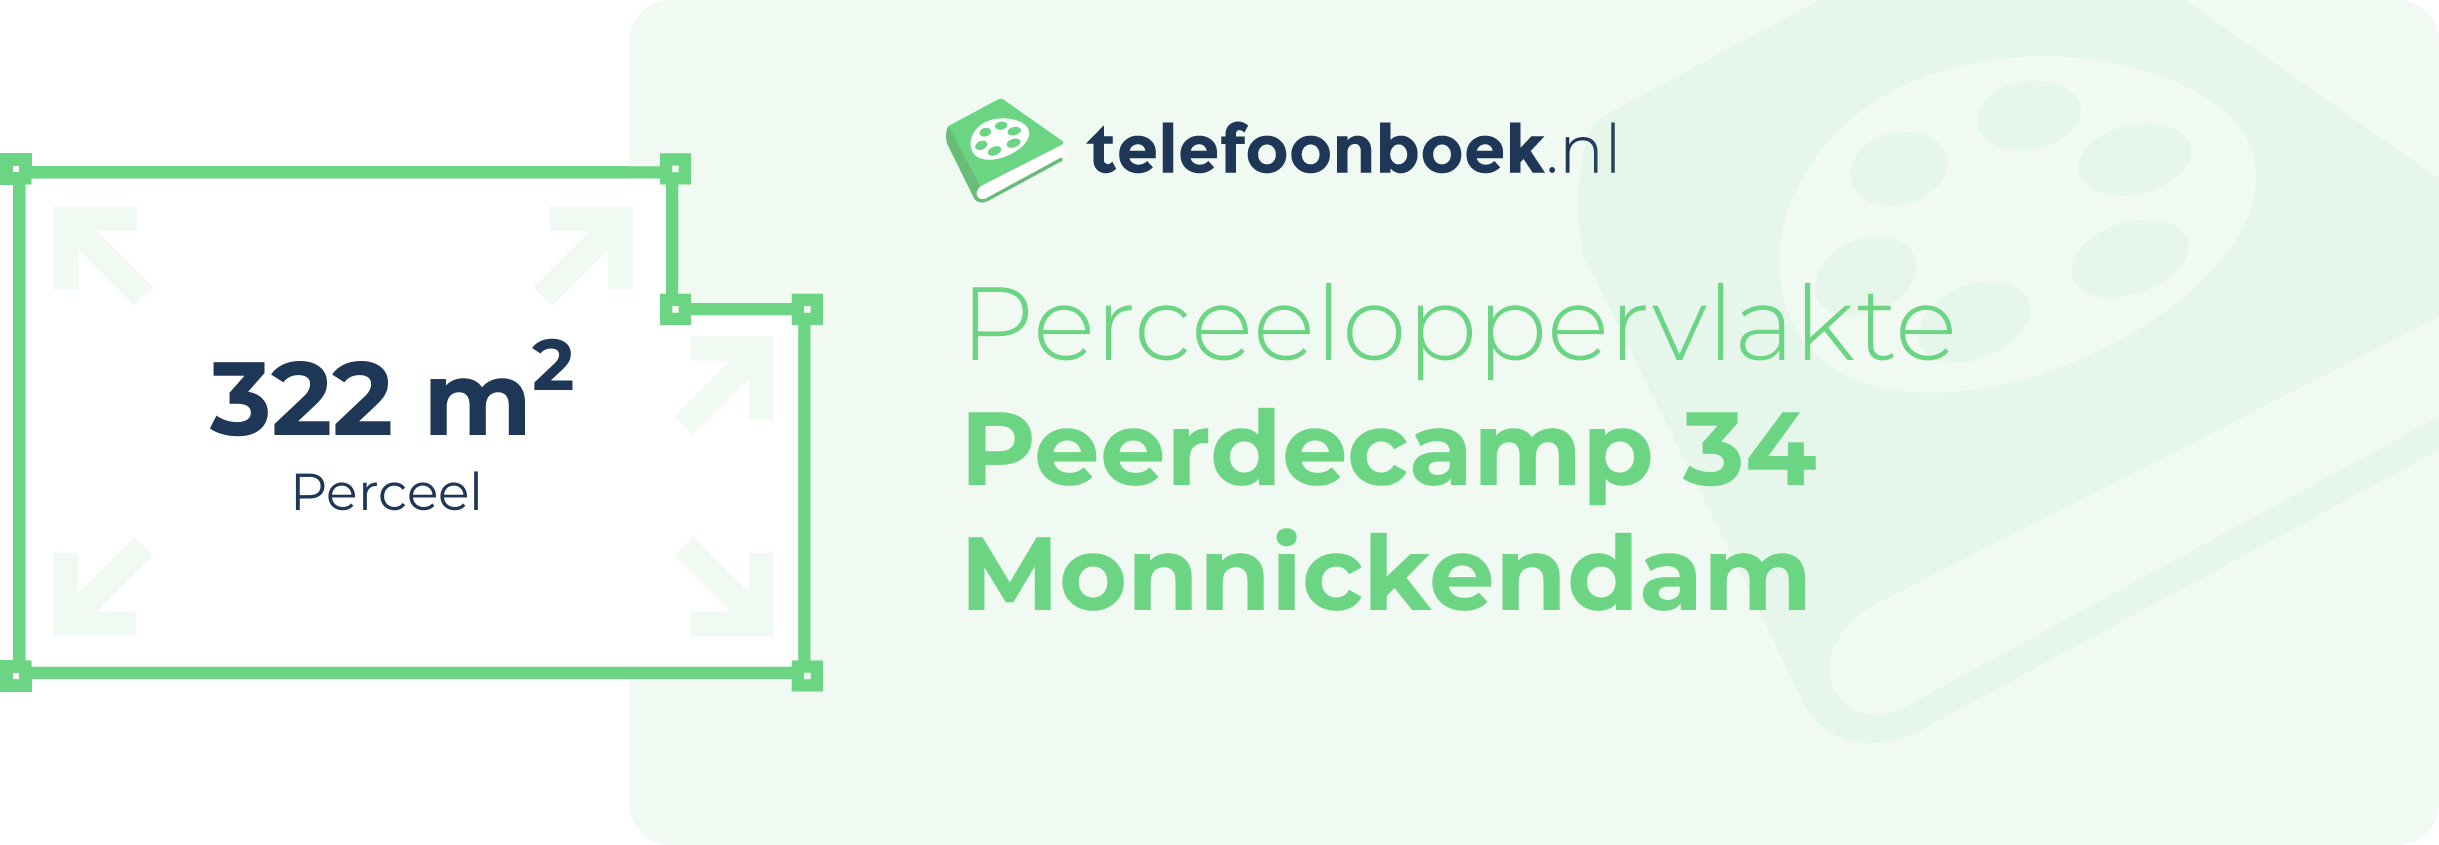 Perceeloppervlakte Peerdecamp 34 Monnickendam